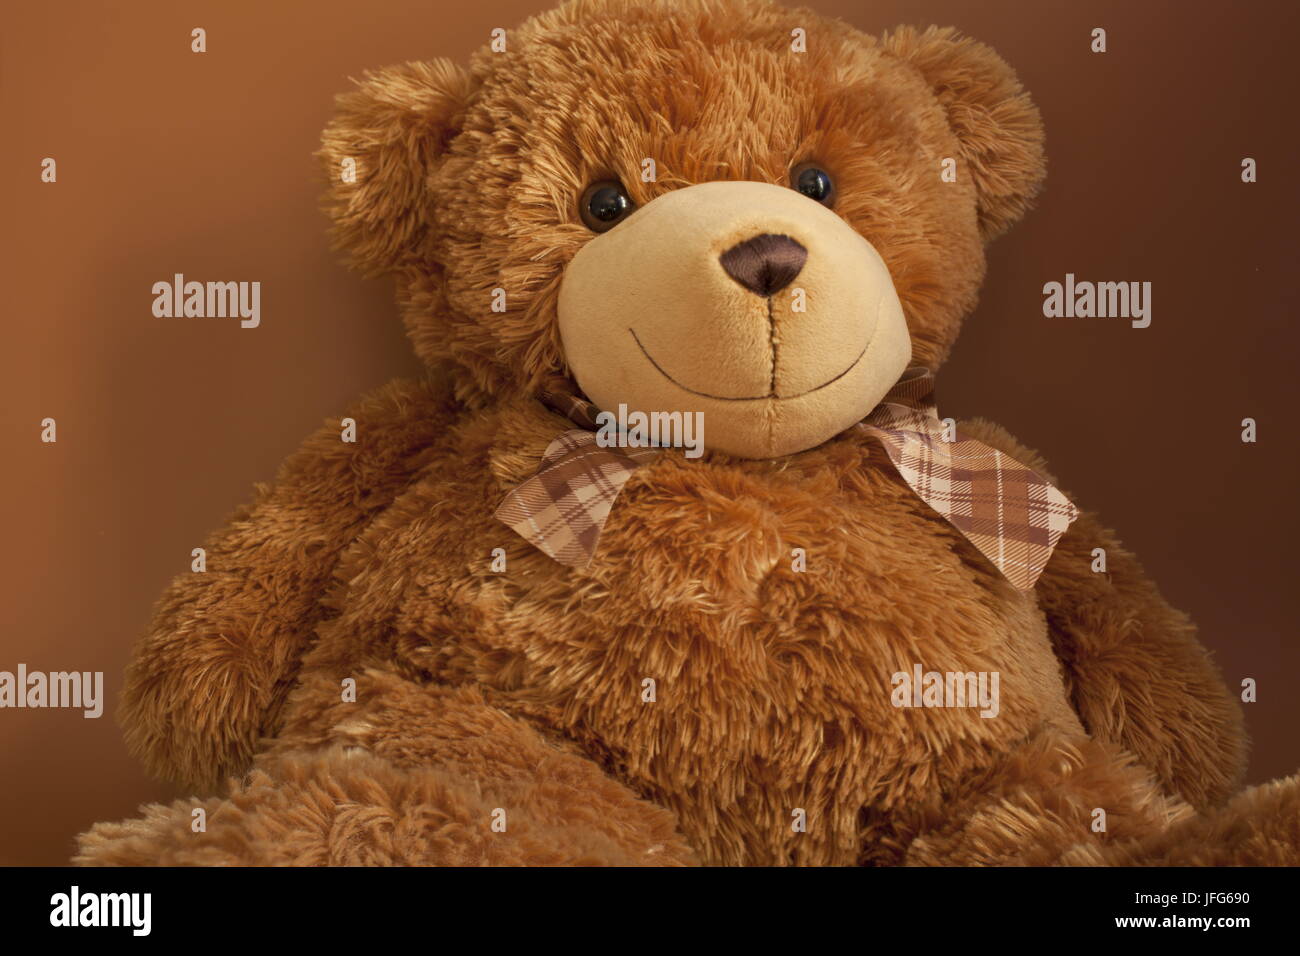 Cheerful Teddy bear Stock Photo